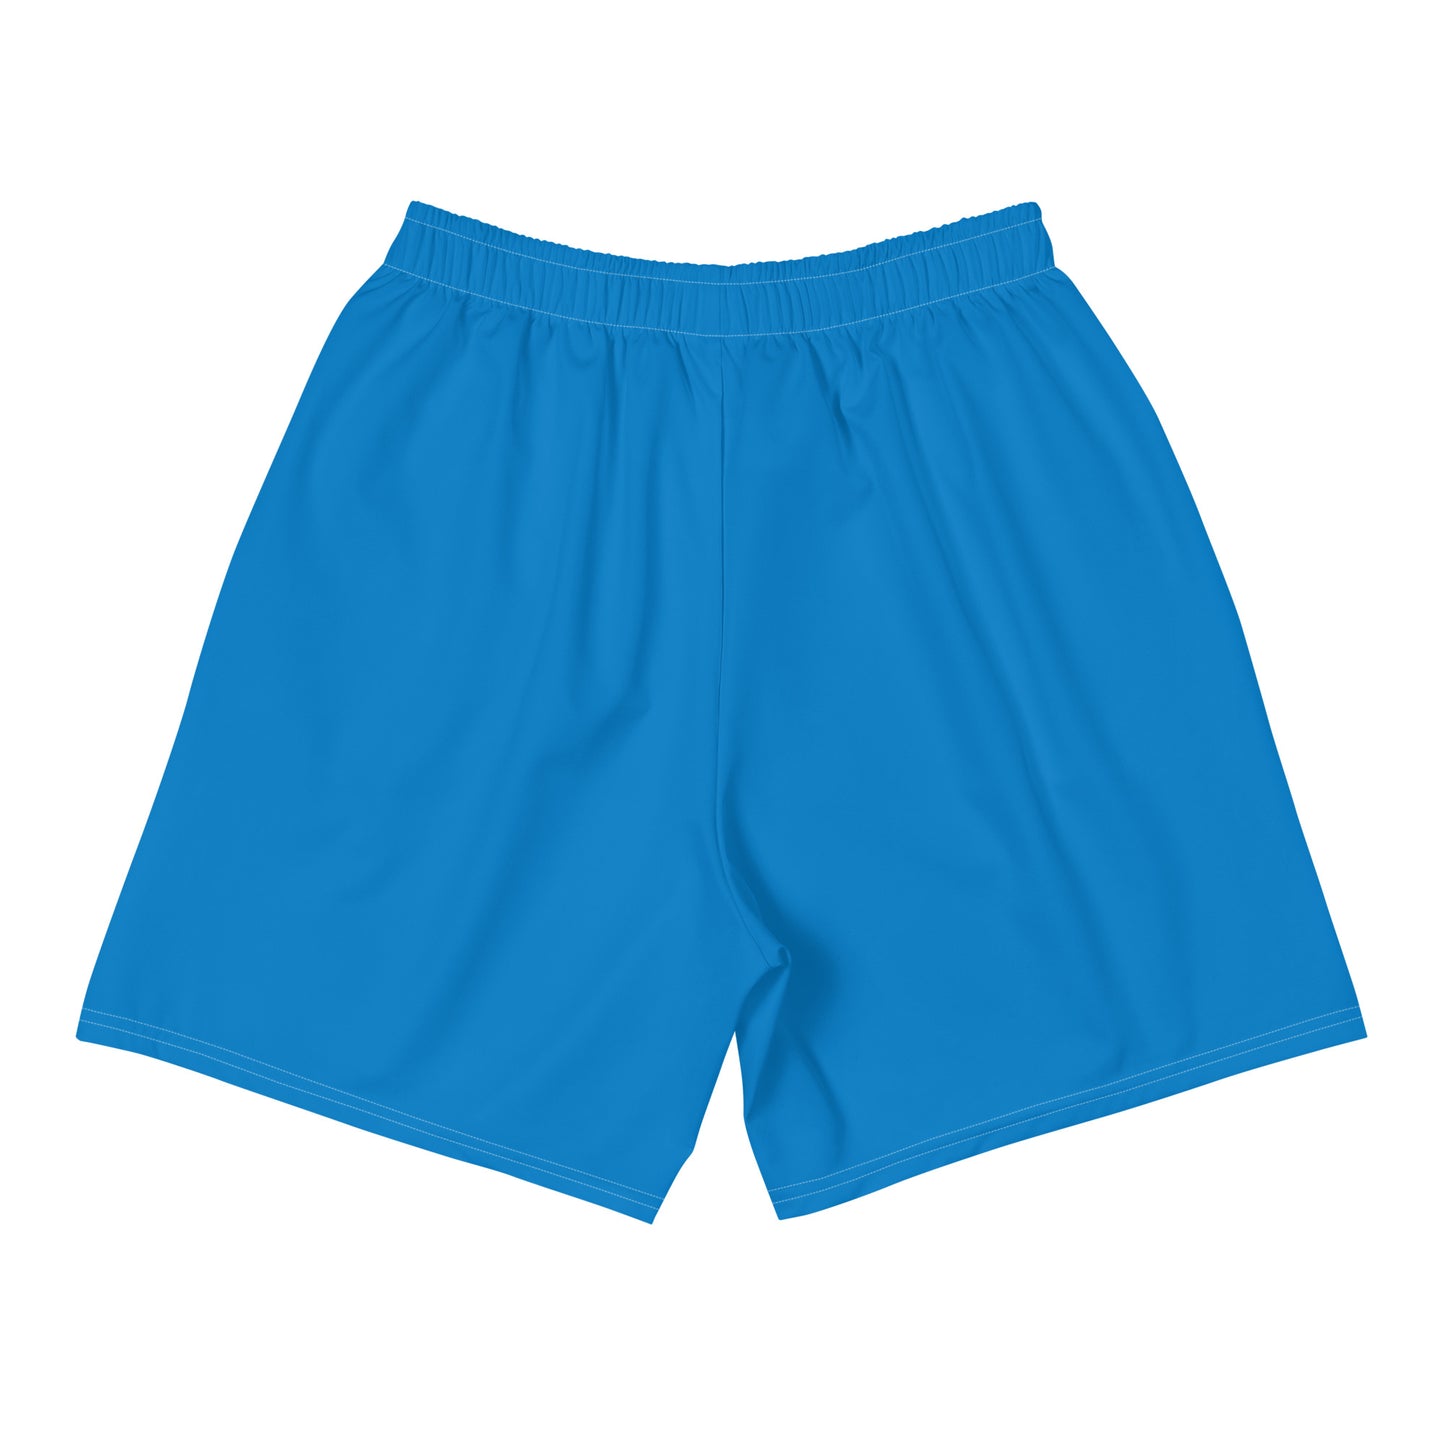 Men's Fitgo Athletic Shorts